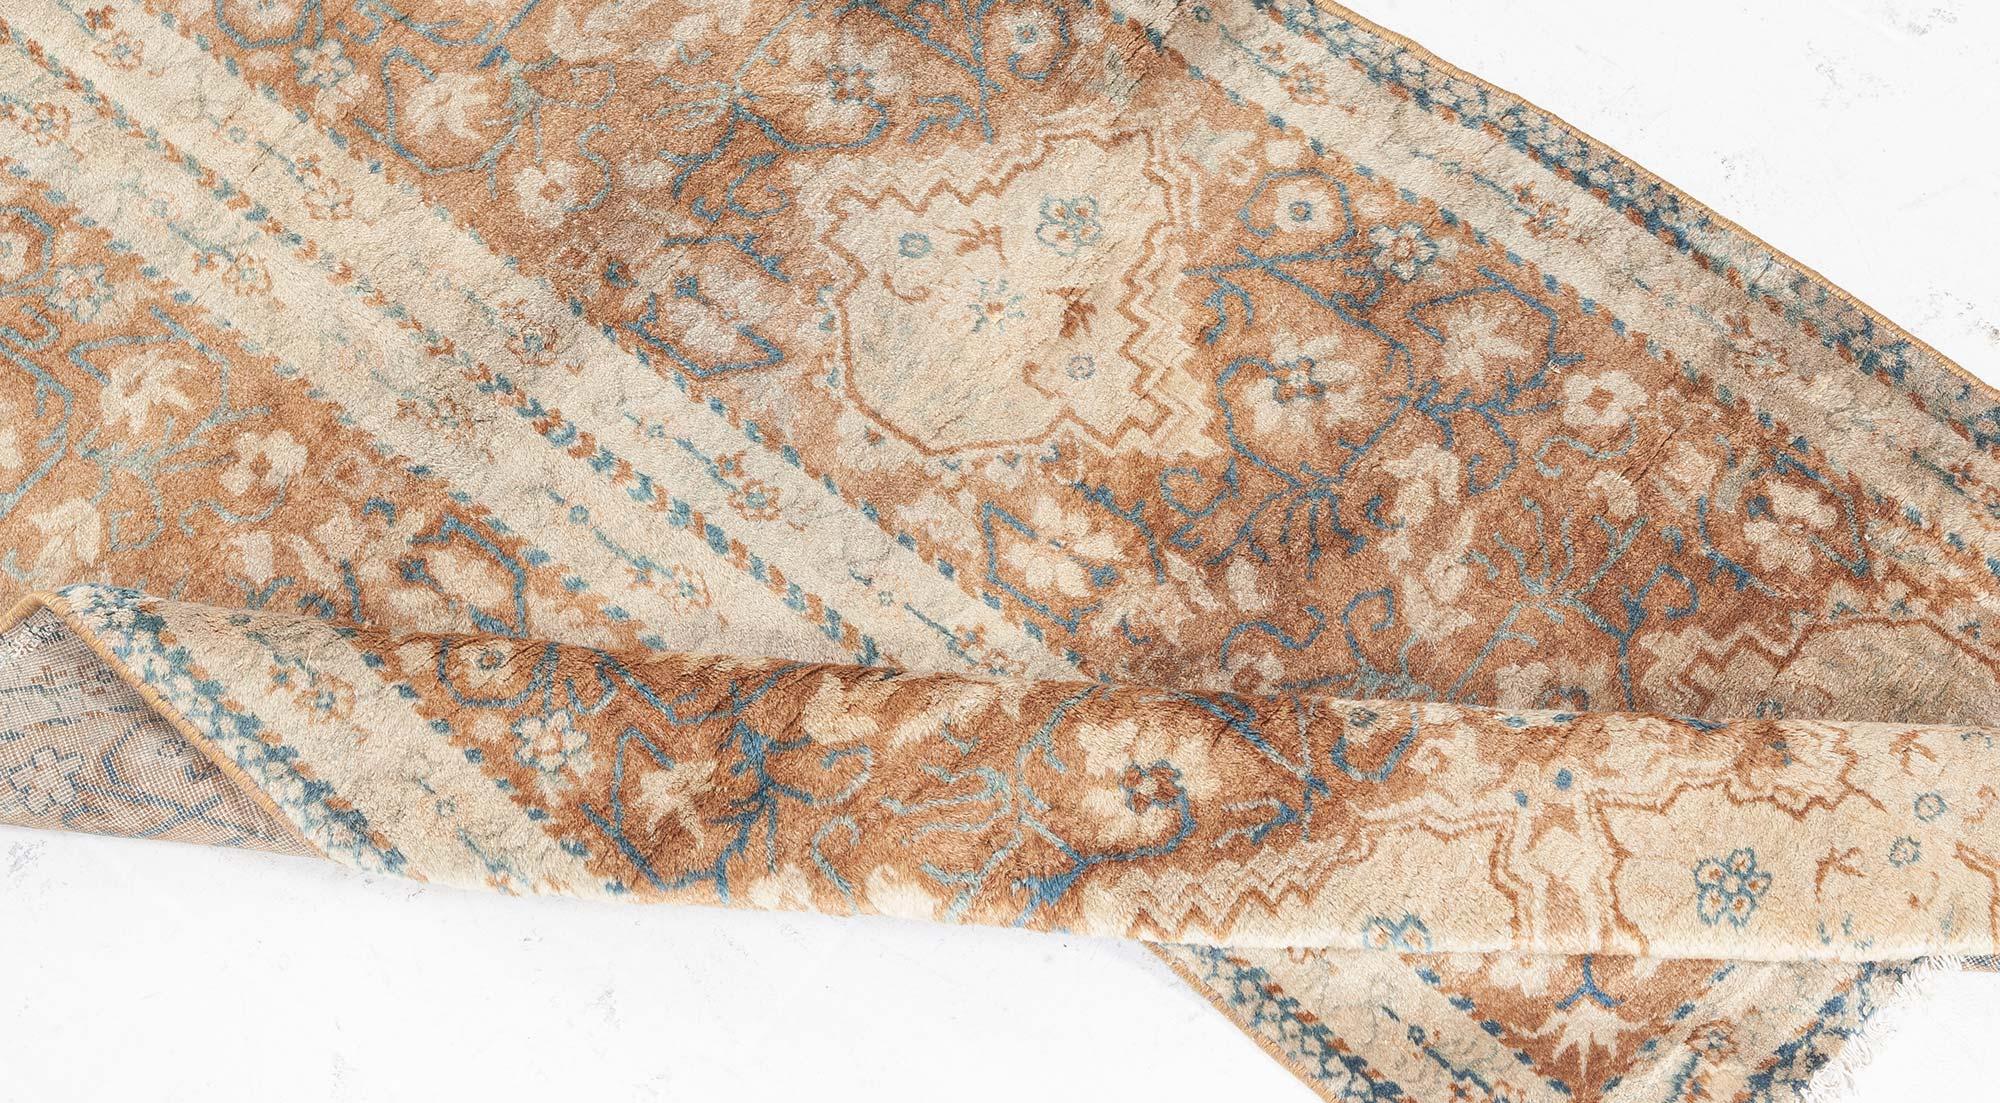 Antique Indian Beige, Brown Handmade Wool Fragment Runner
Size: 2'6